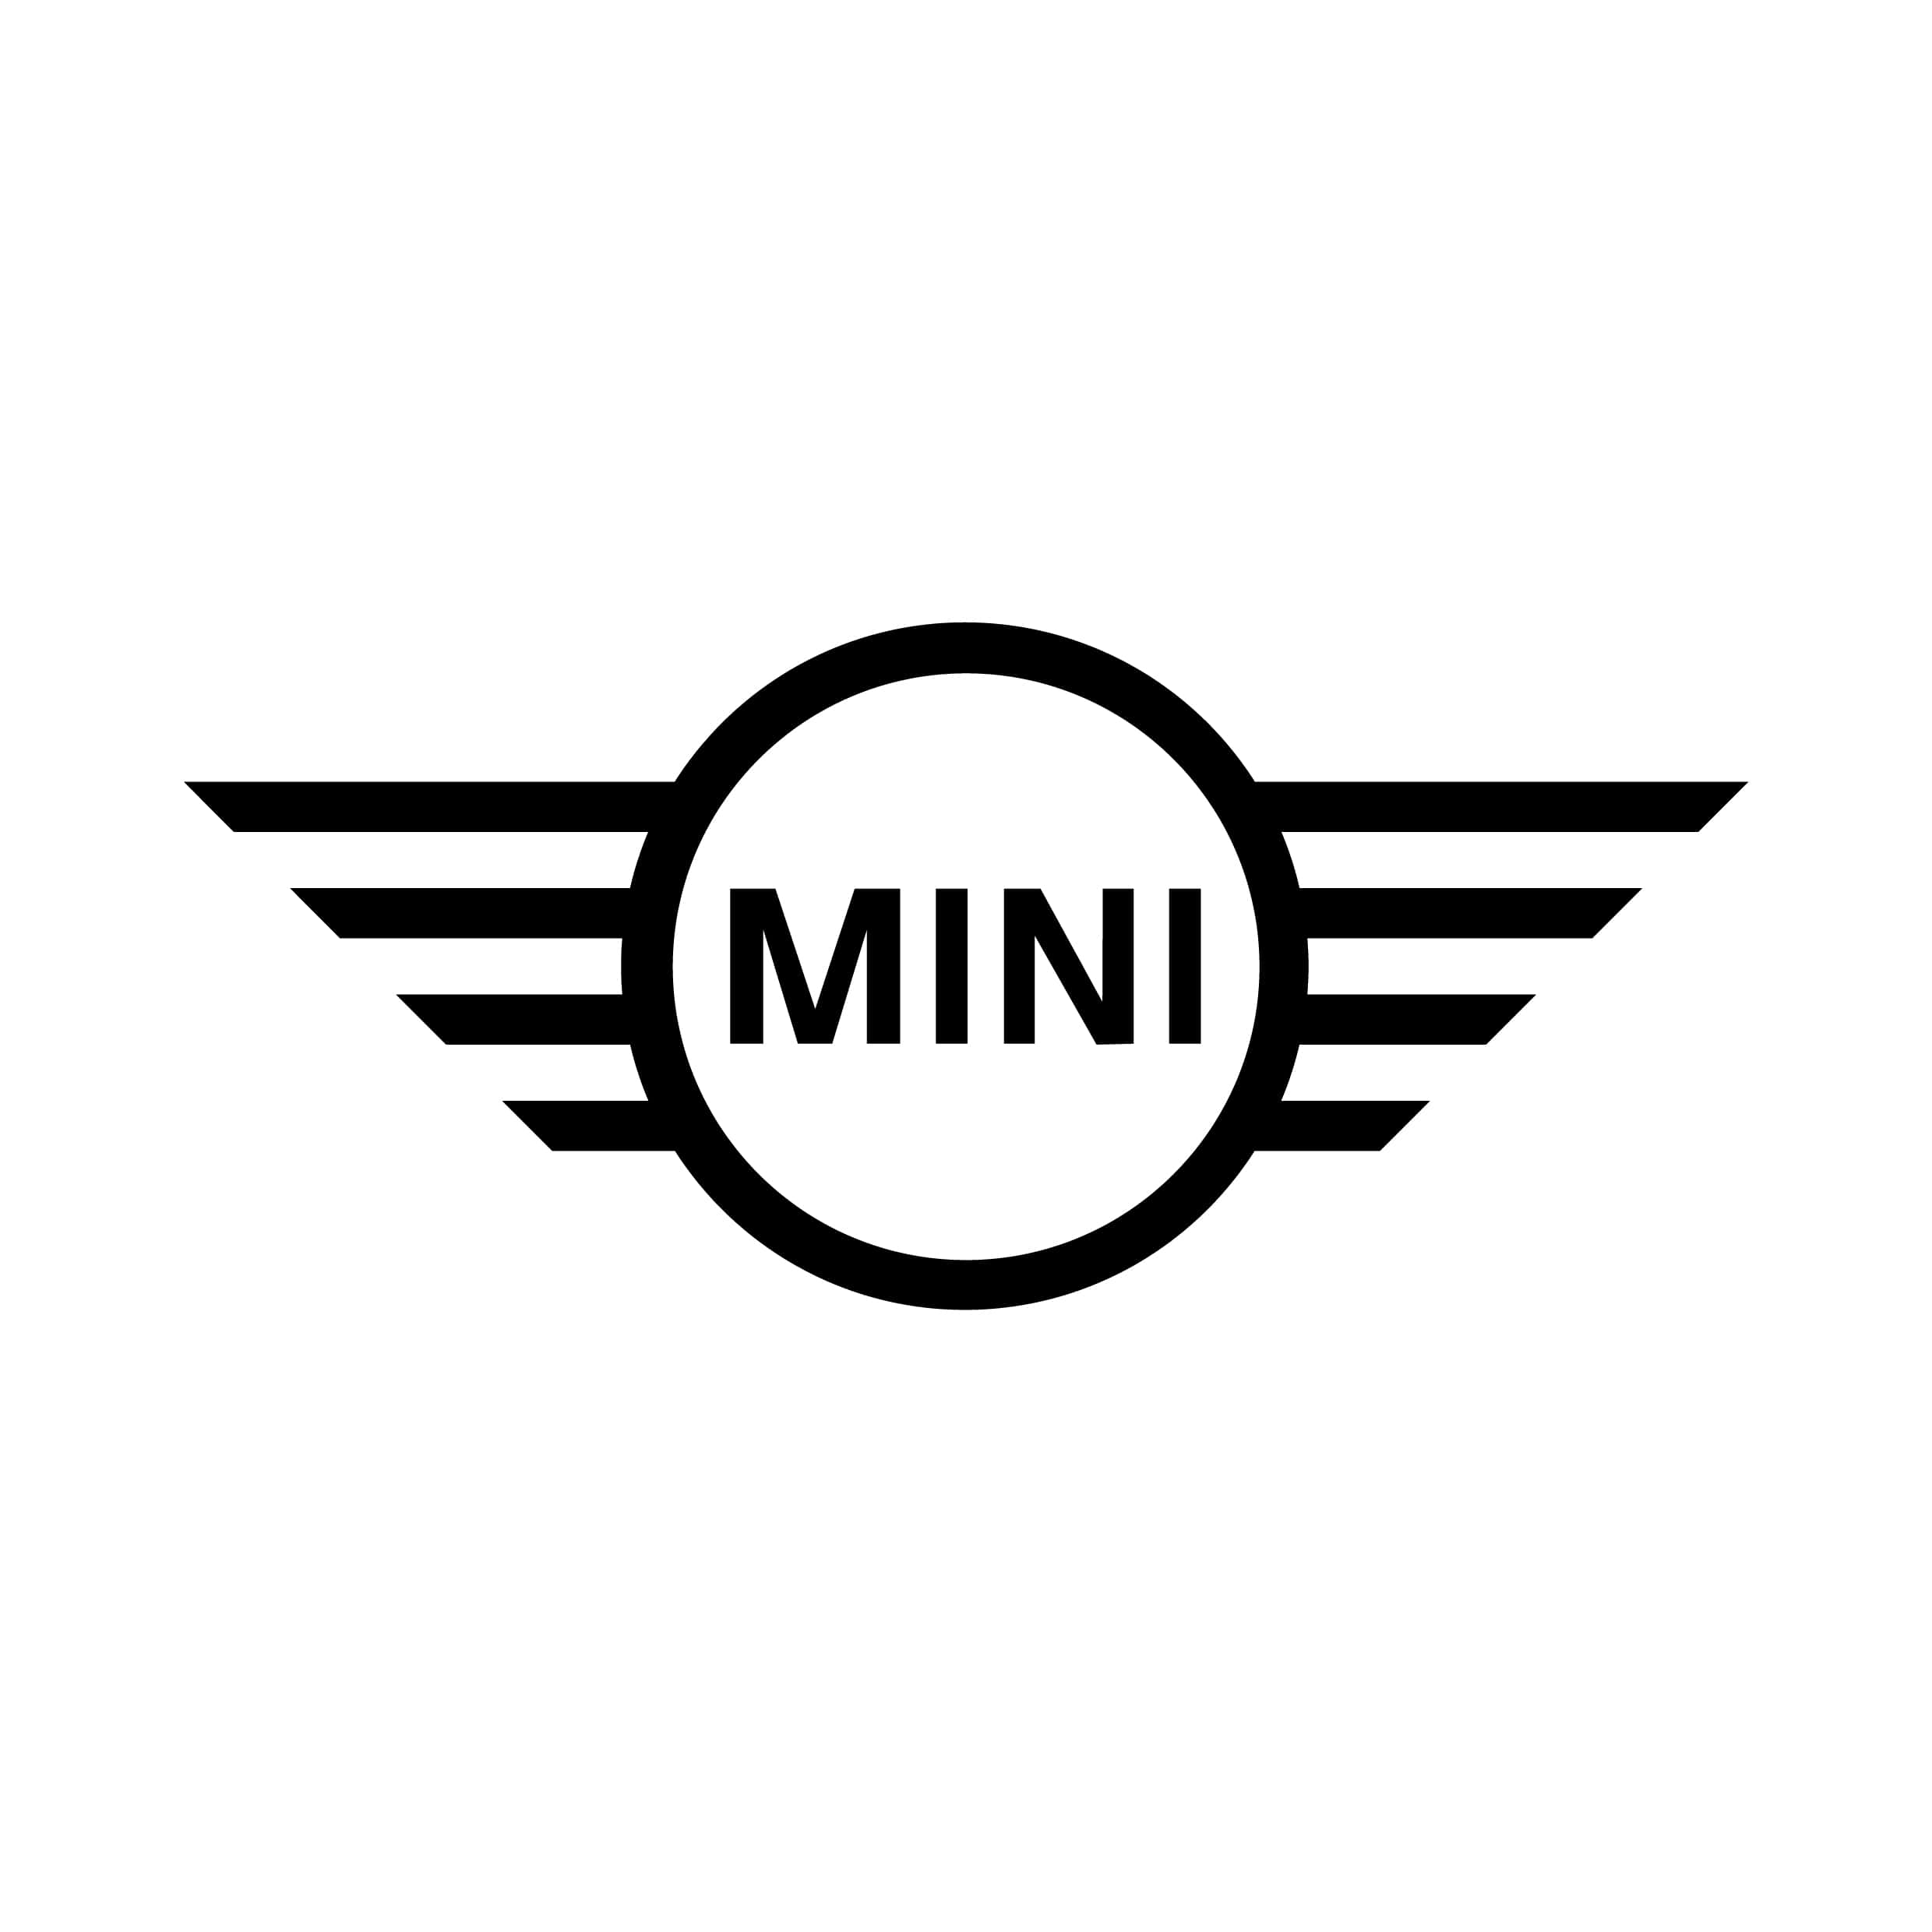 stickers-mini-ref7-bmw-autocollant-voiture-sticker-auto-autocollants-decals-sponsors-racing-tuning-sport-logo-min